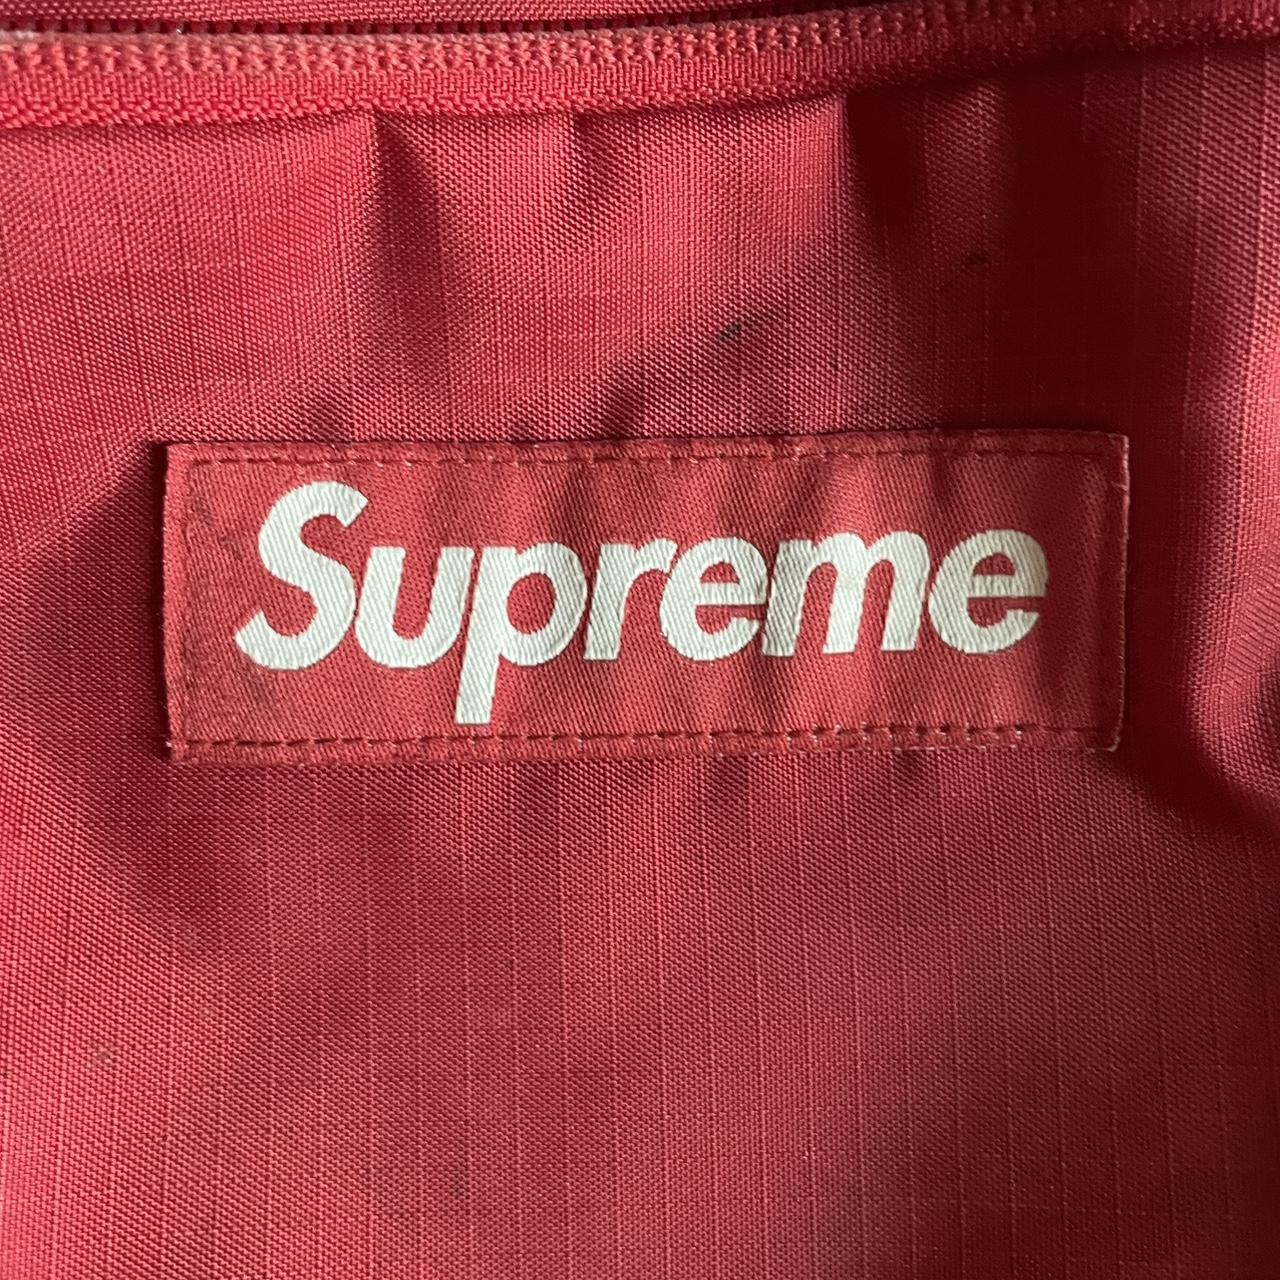 Supreme, Bags, Supreme Backpack Red Box Logo